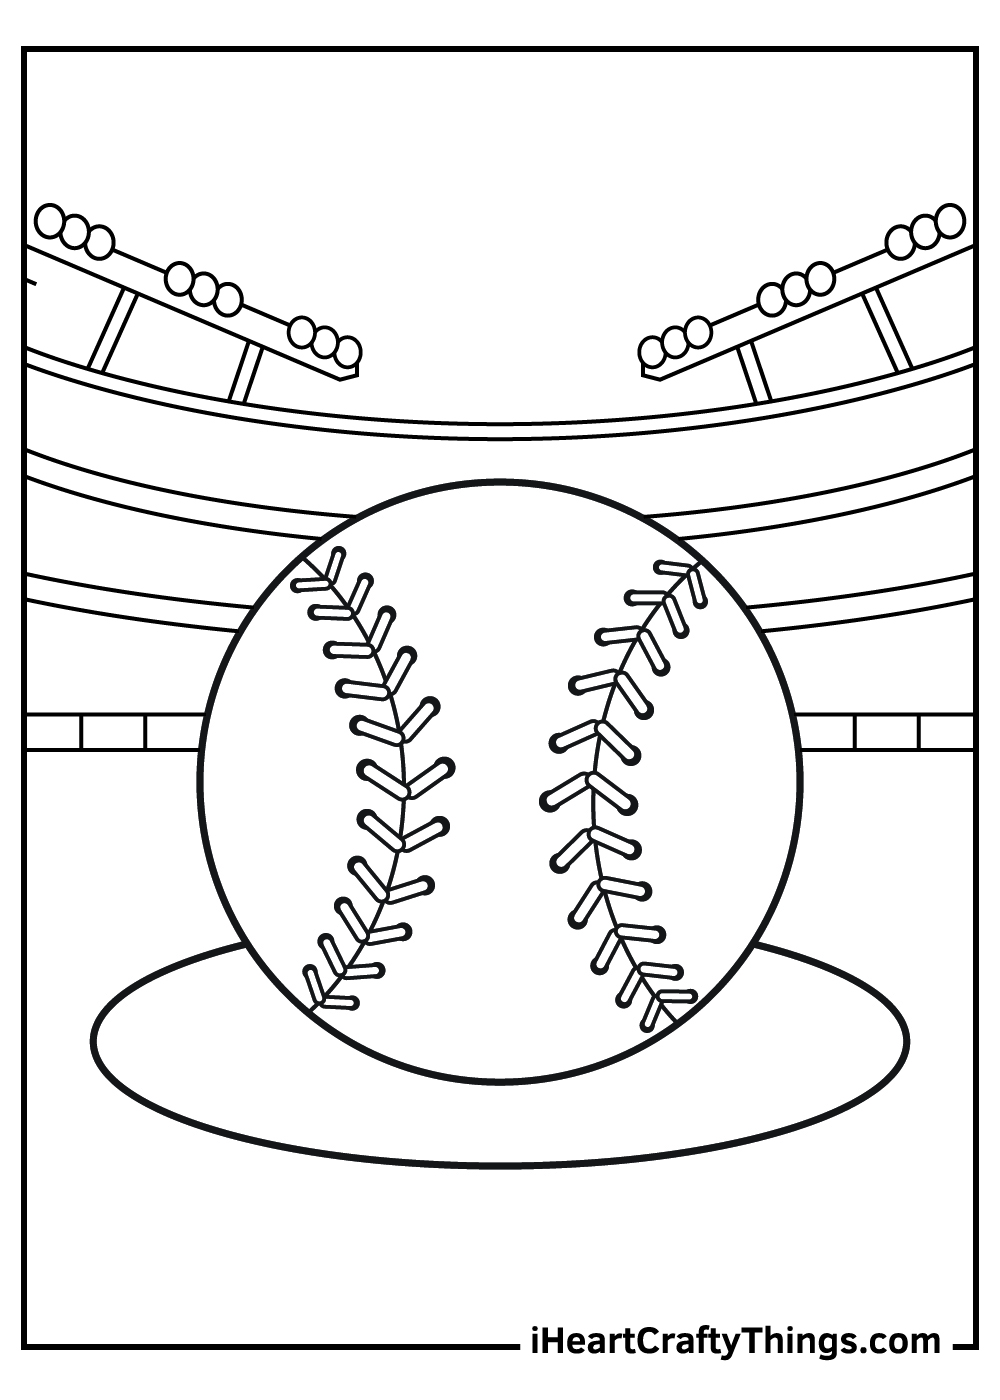 Baseball coloring pages free printables